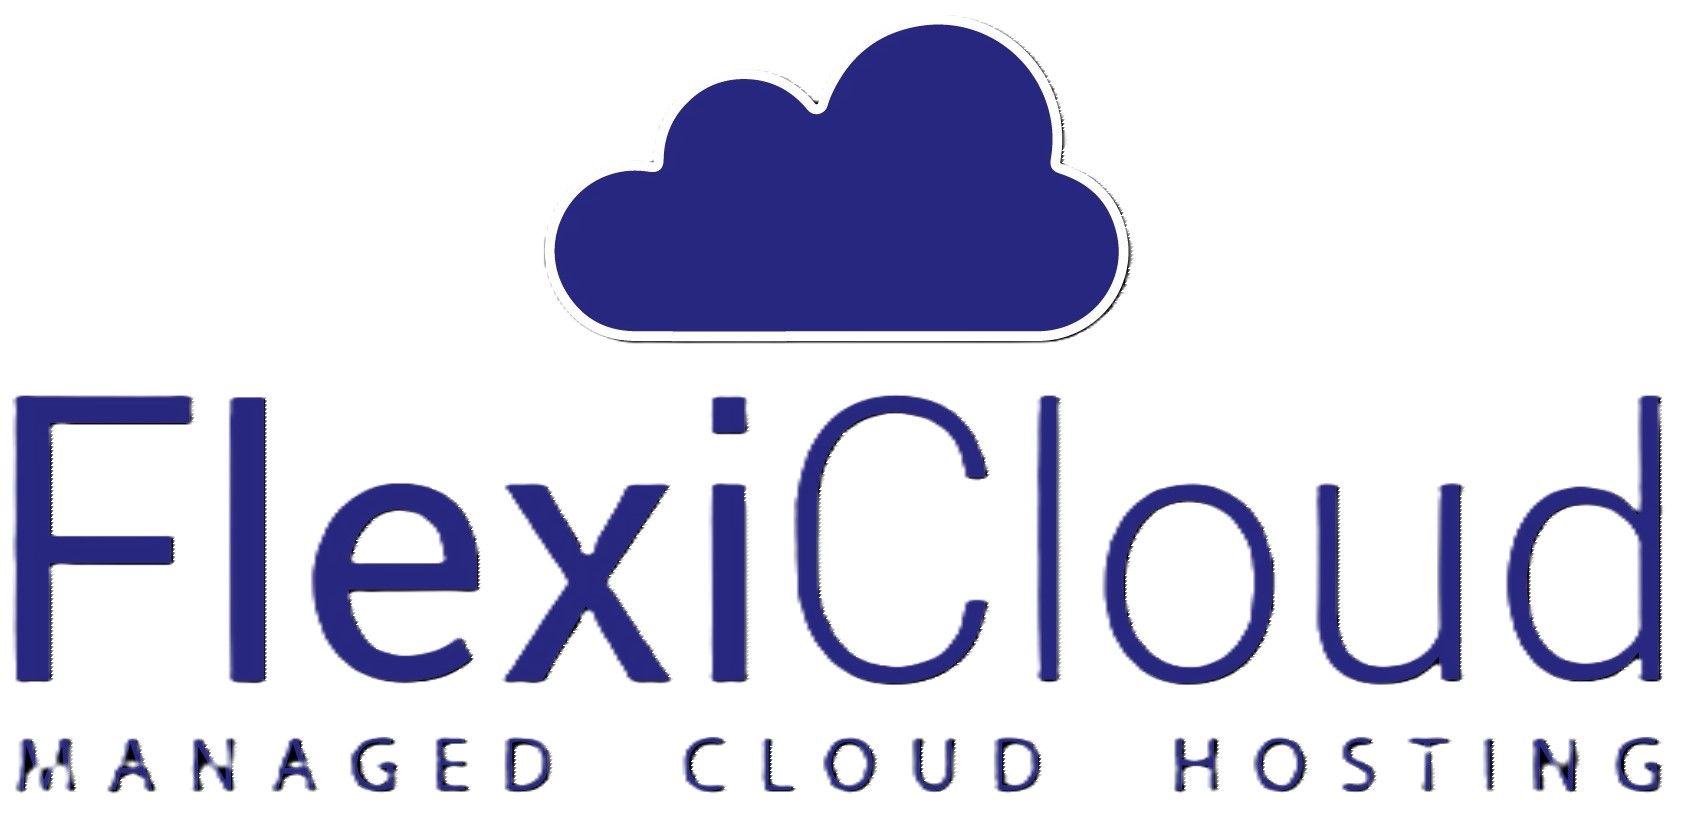 Hosting Provider FlexiCloud Internet Receives